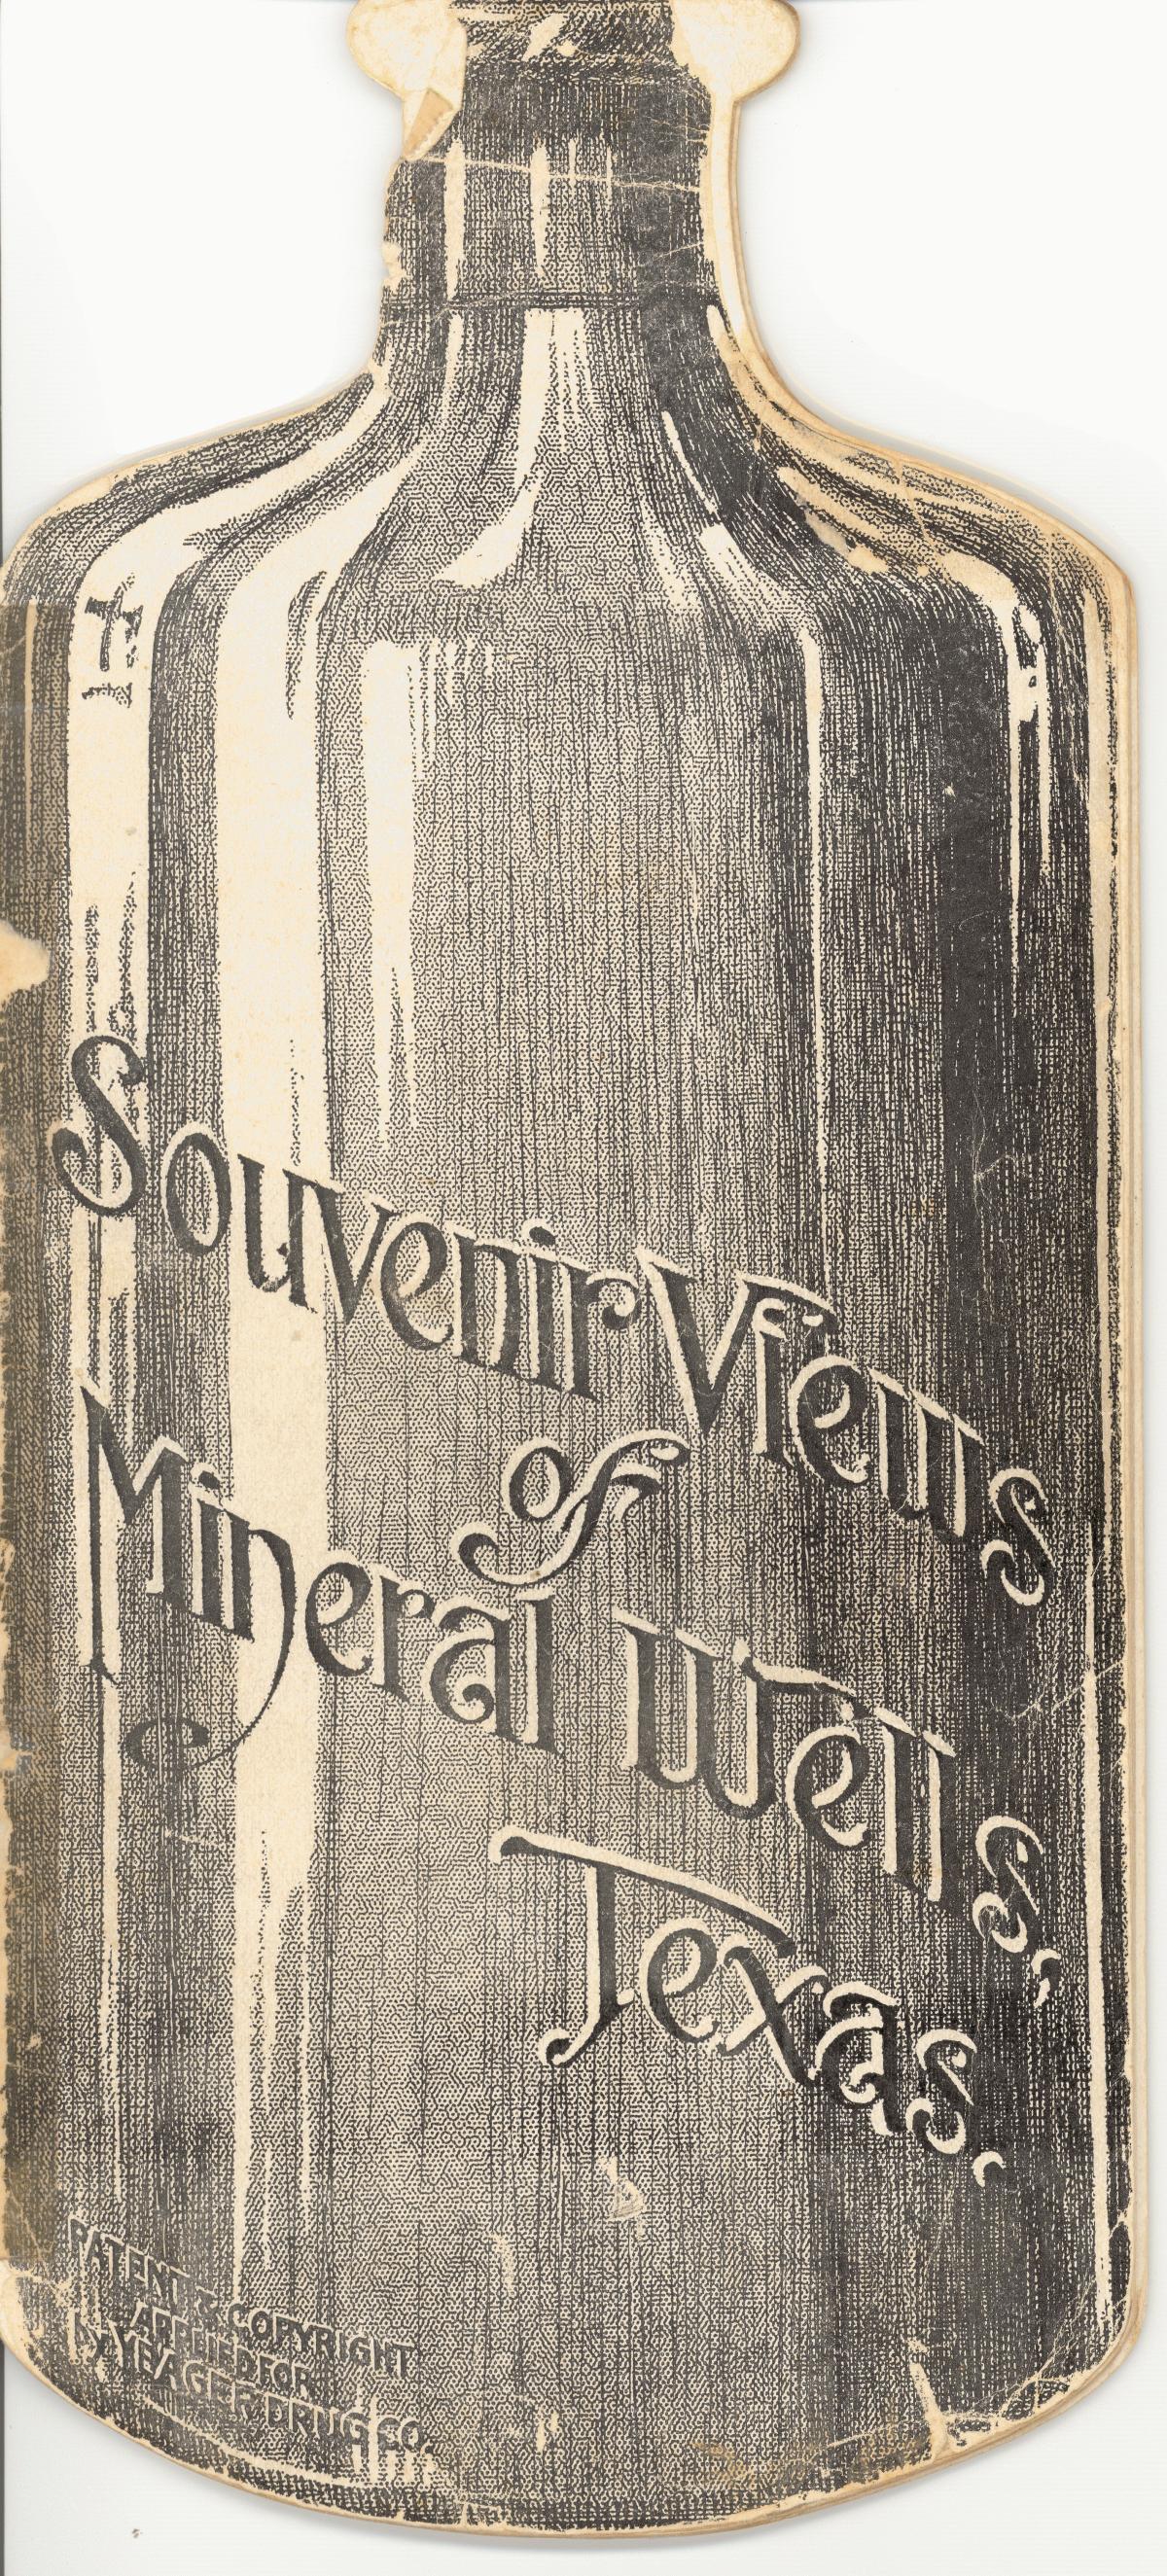 Souvenir Views of Mineral Wells, Texas
                                                
                                                    1
                                                